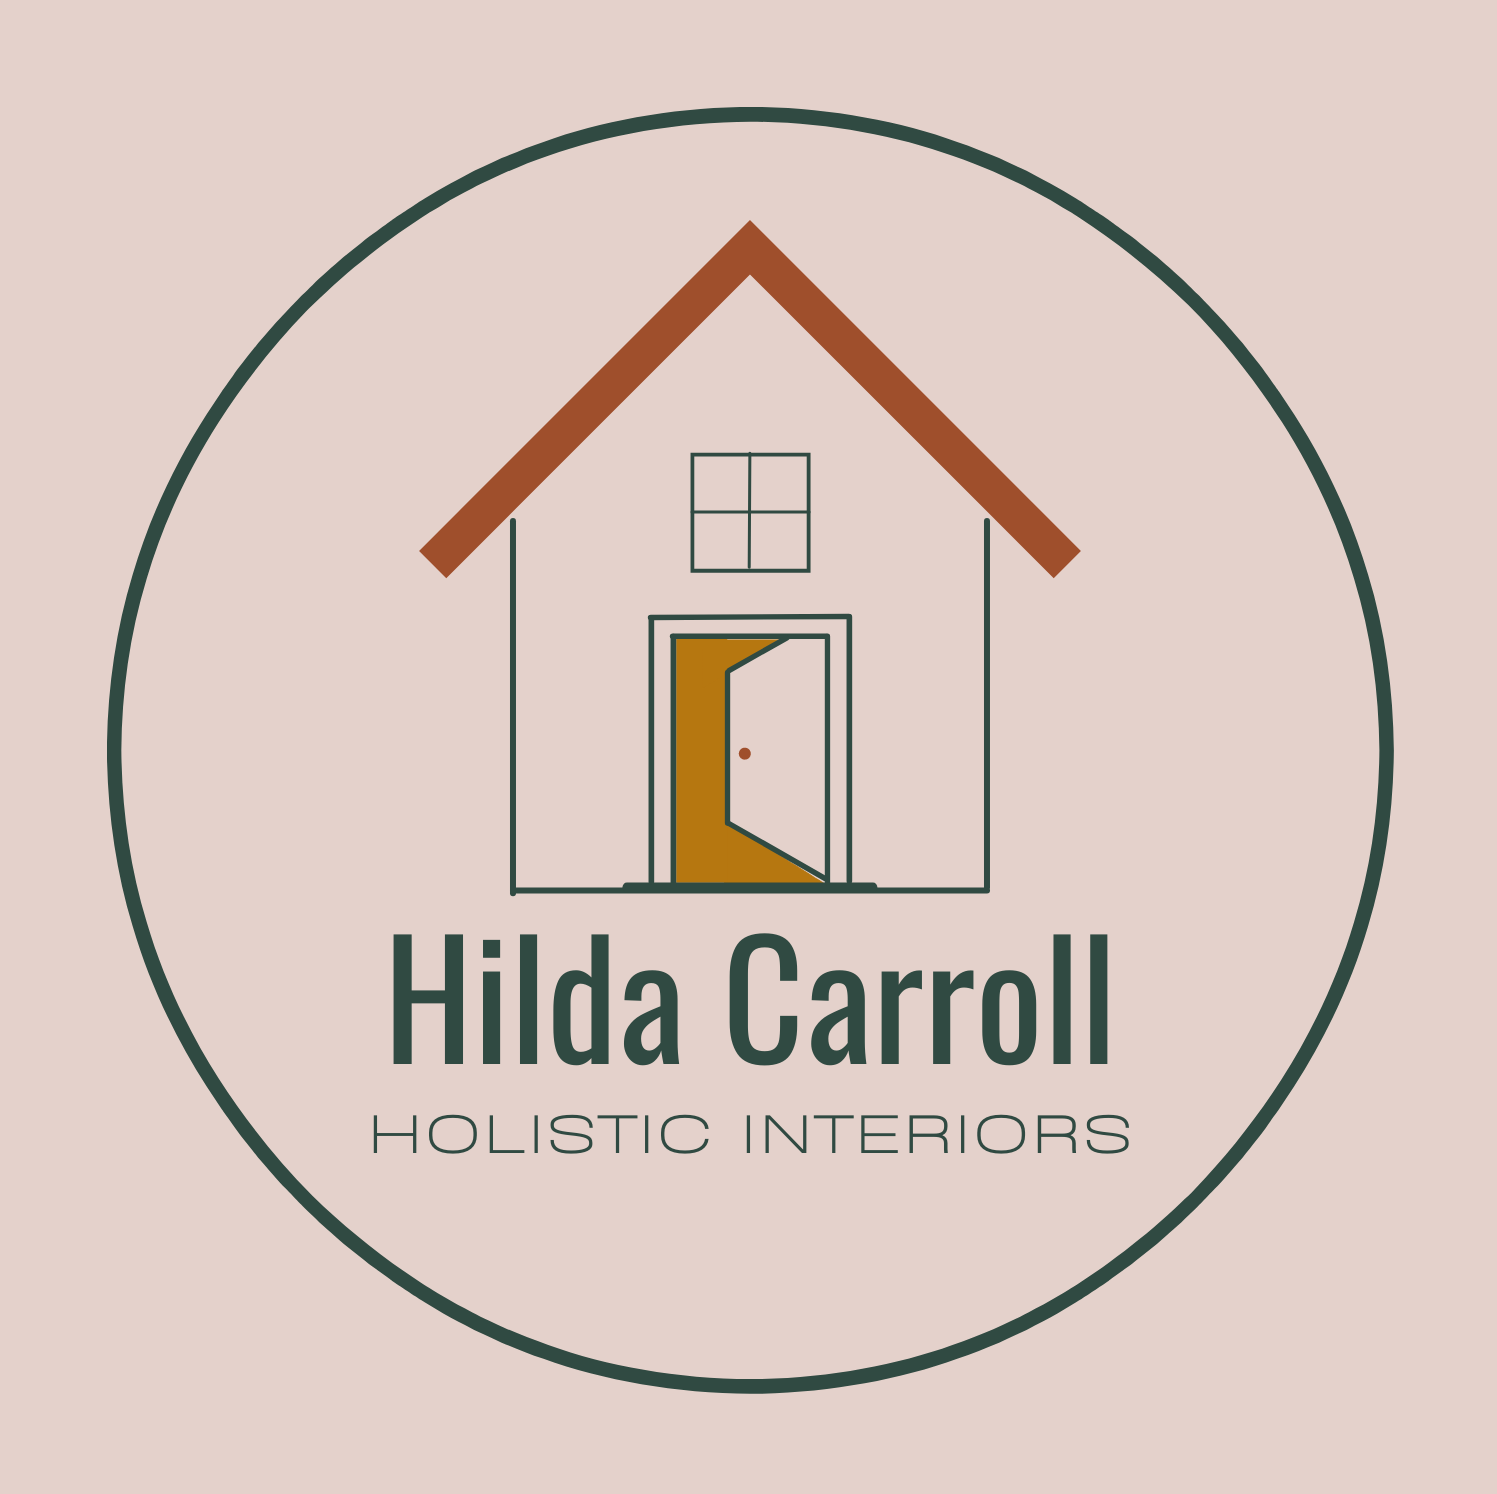 Hilda Carroll Holistic Interiors